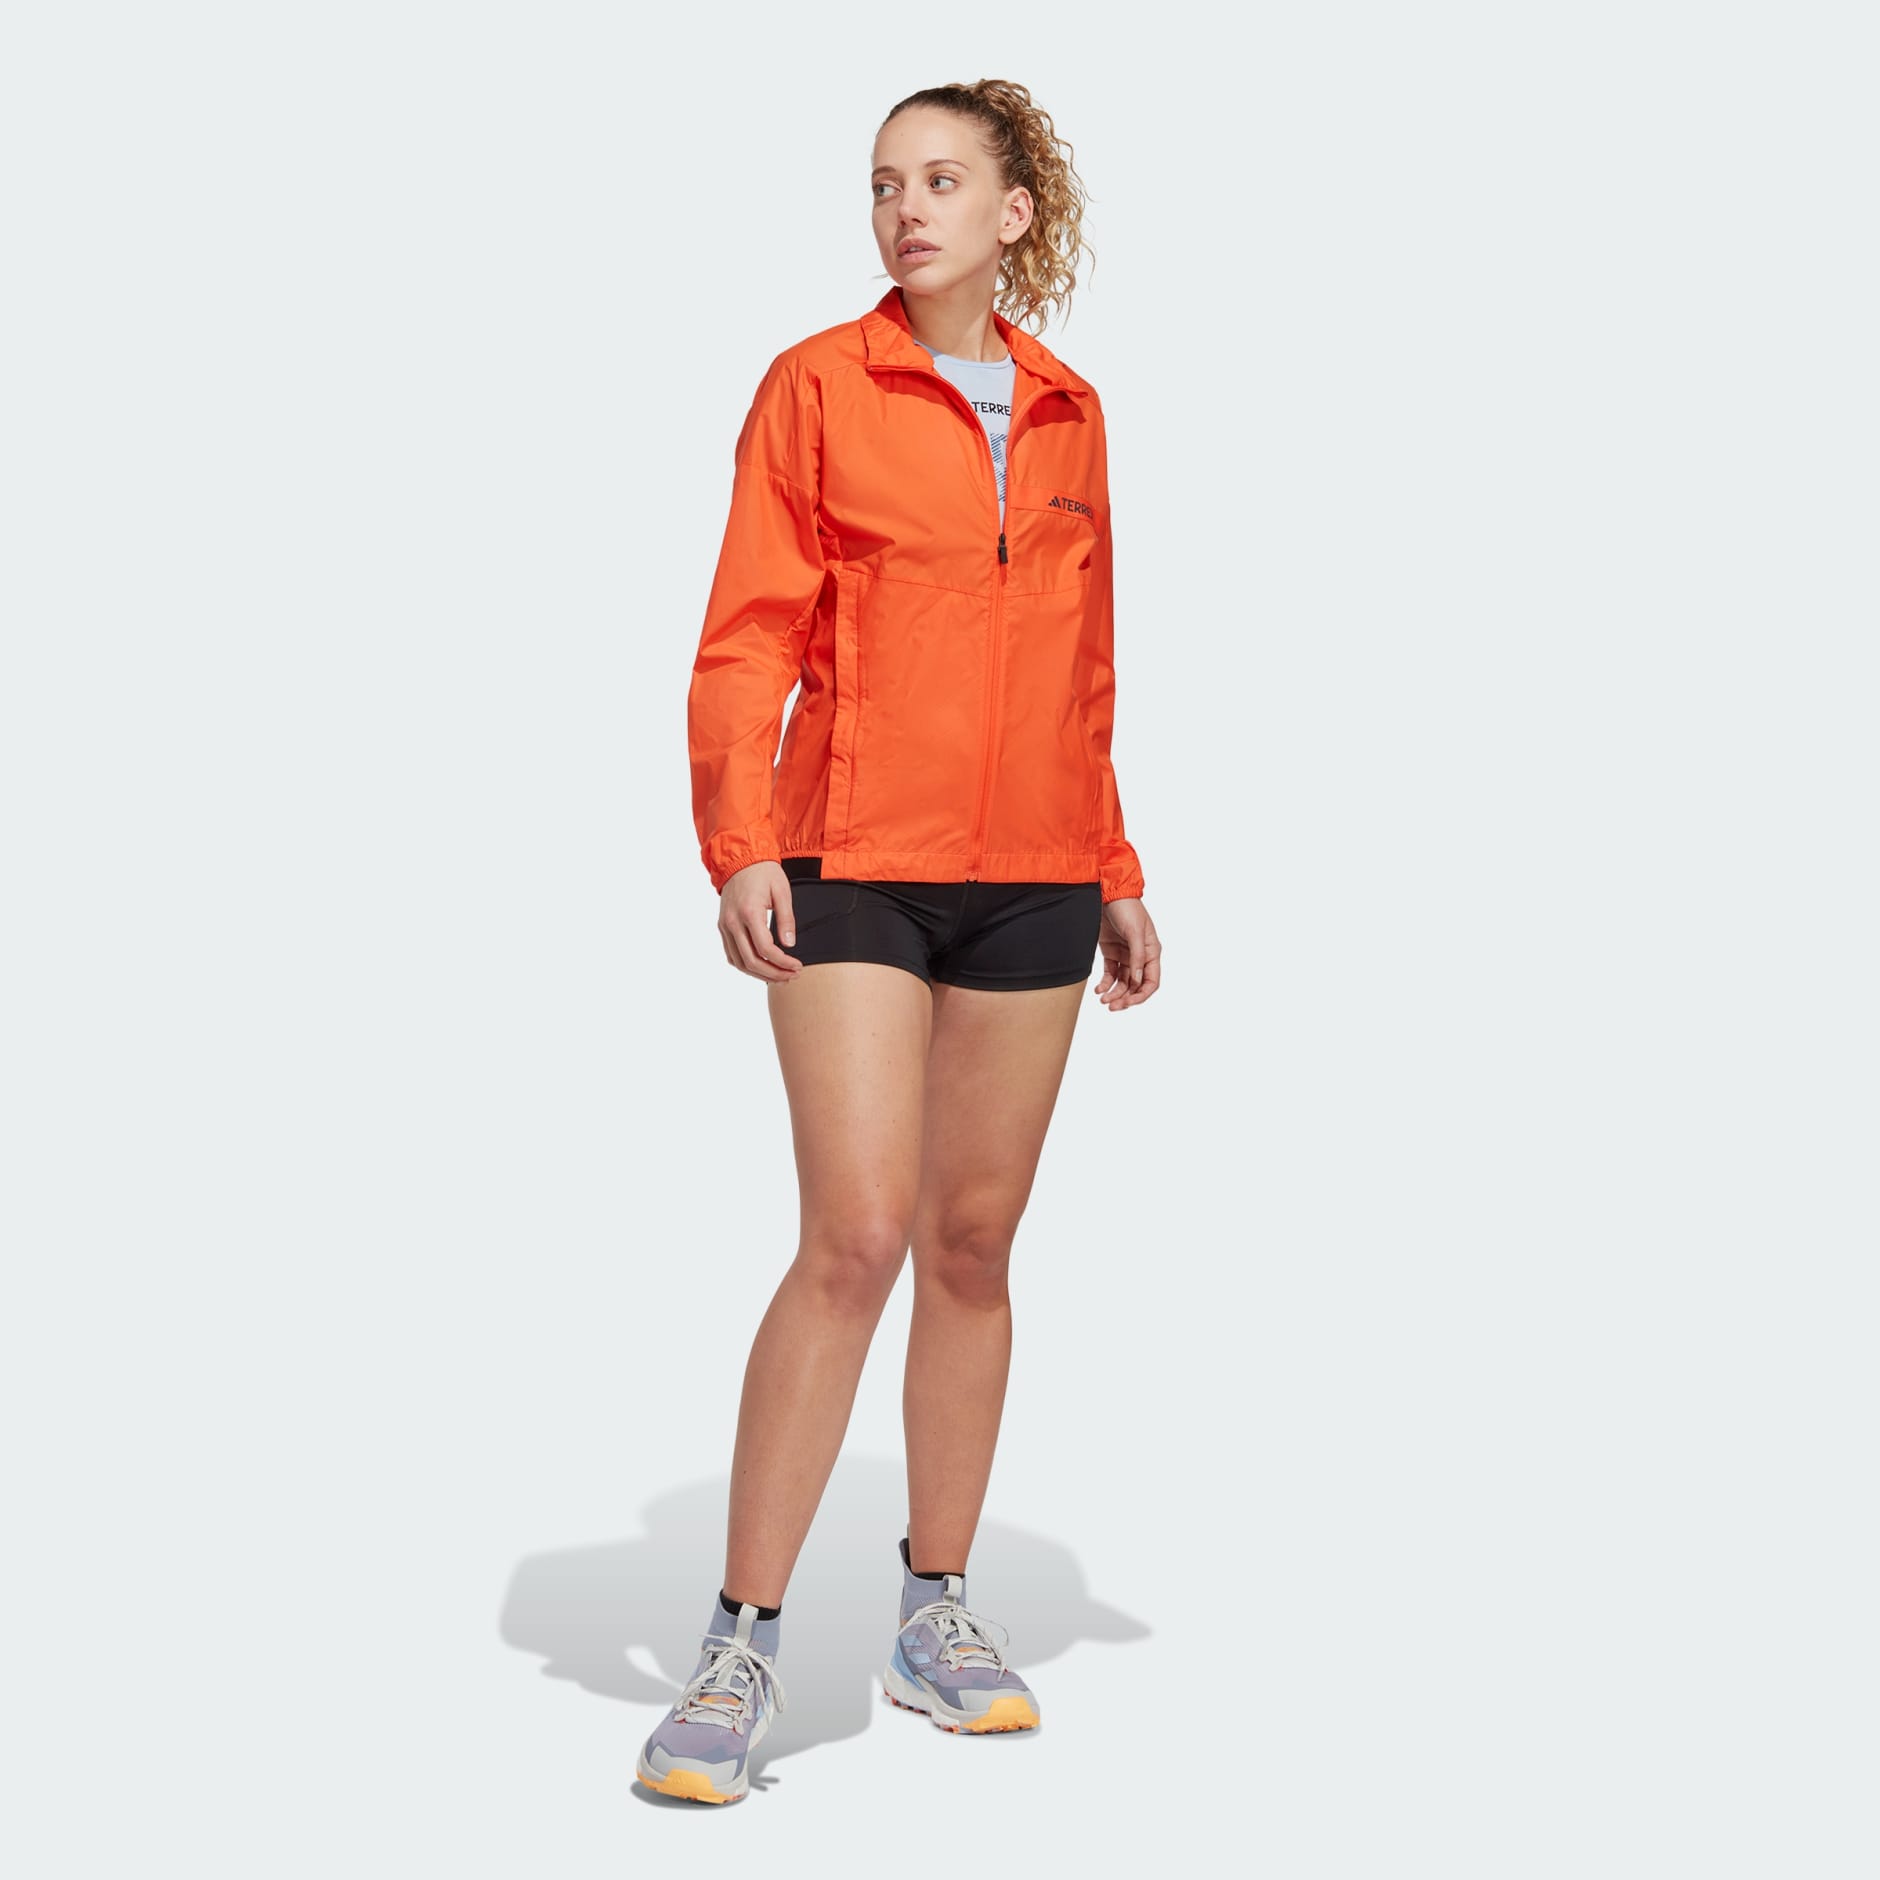 Women's Clothing - Terrex Multi Wind Jacket - Orange | adidas Saudi Arabia